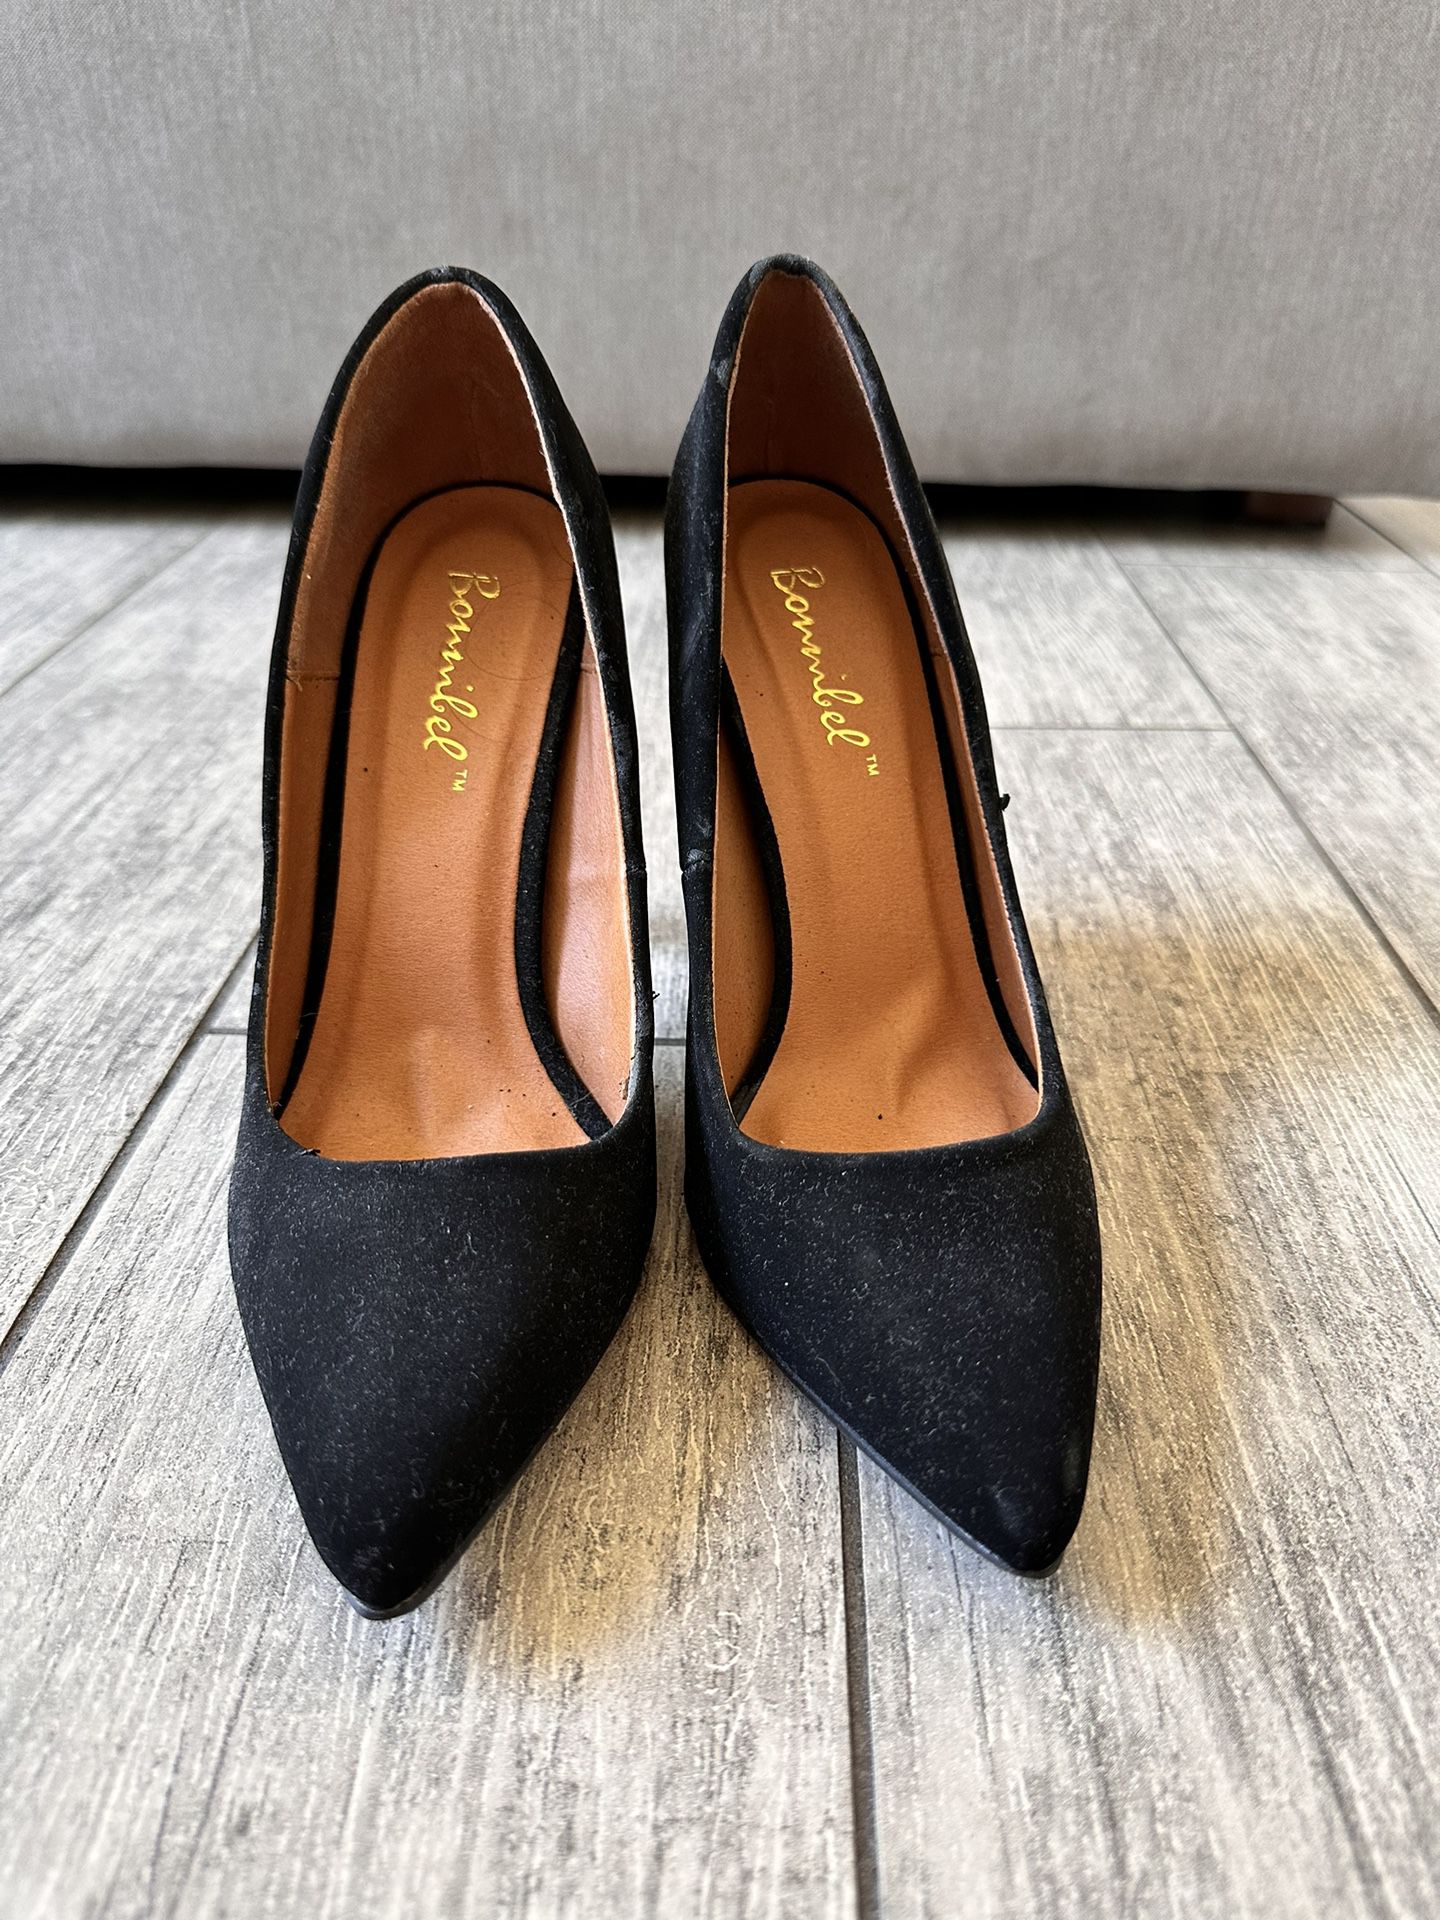 Black Business Heels - Size 6.5